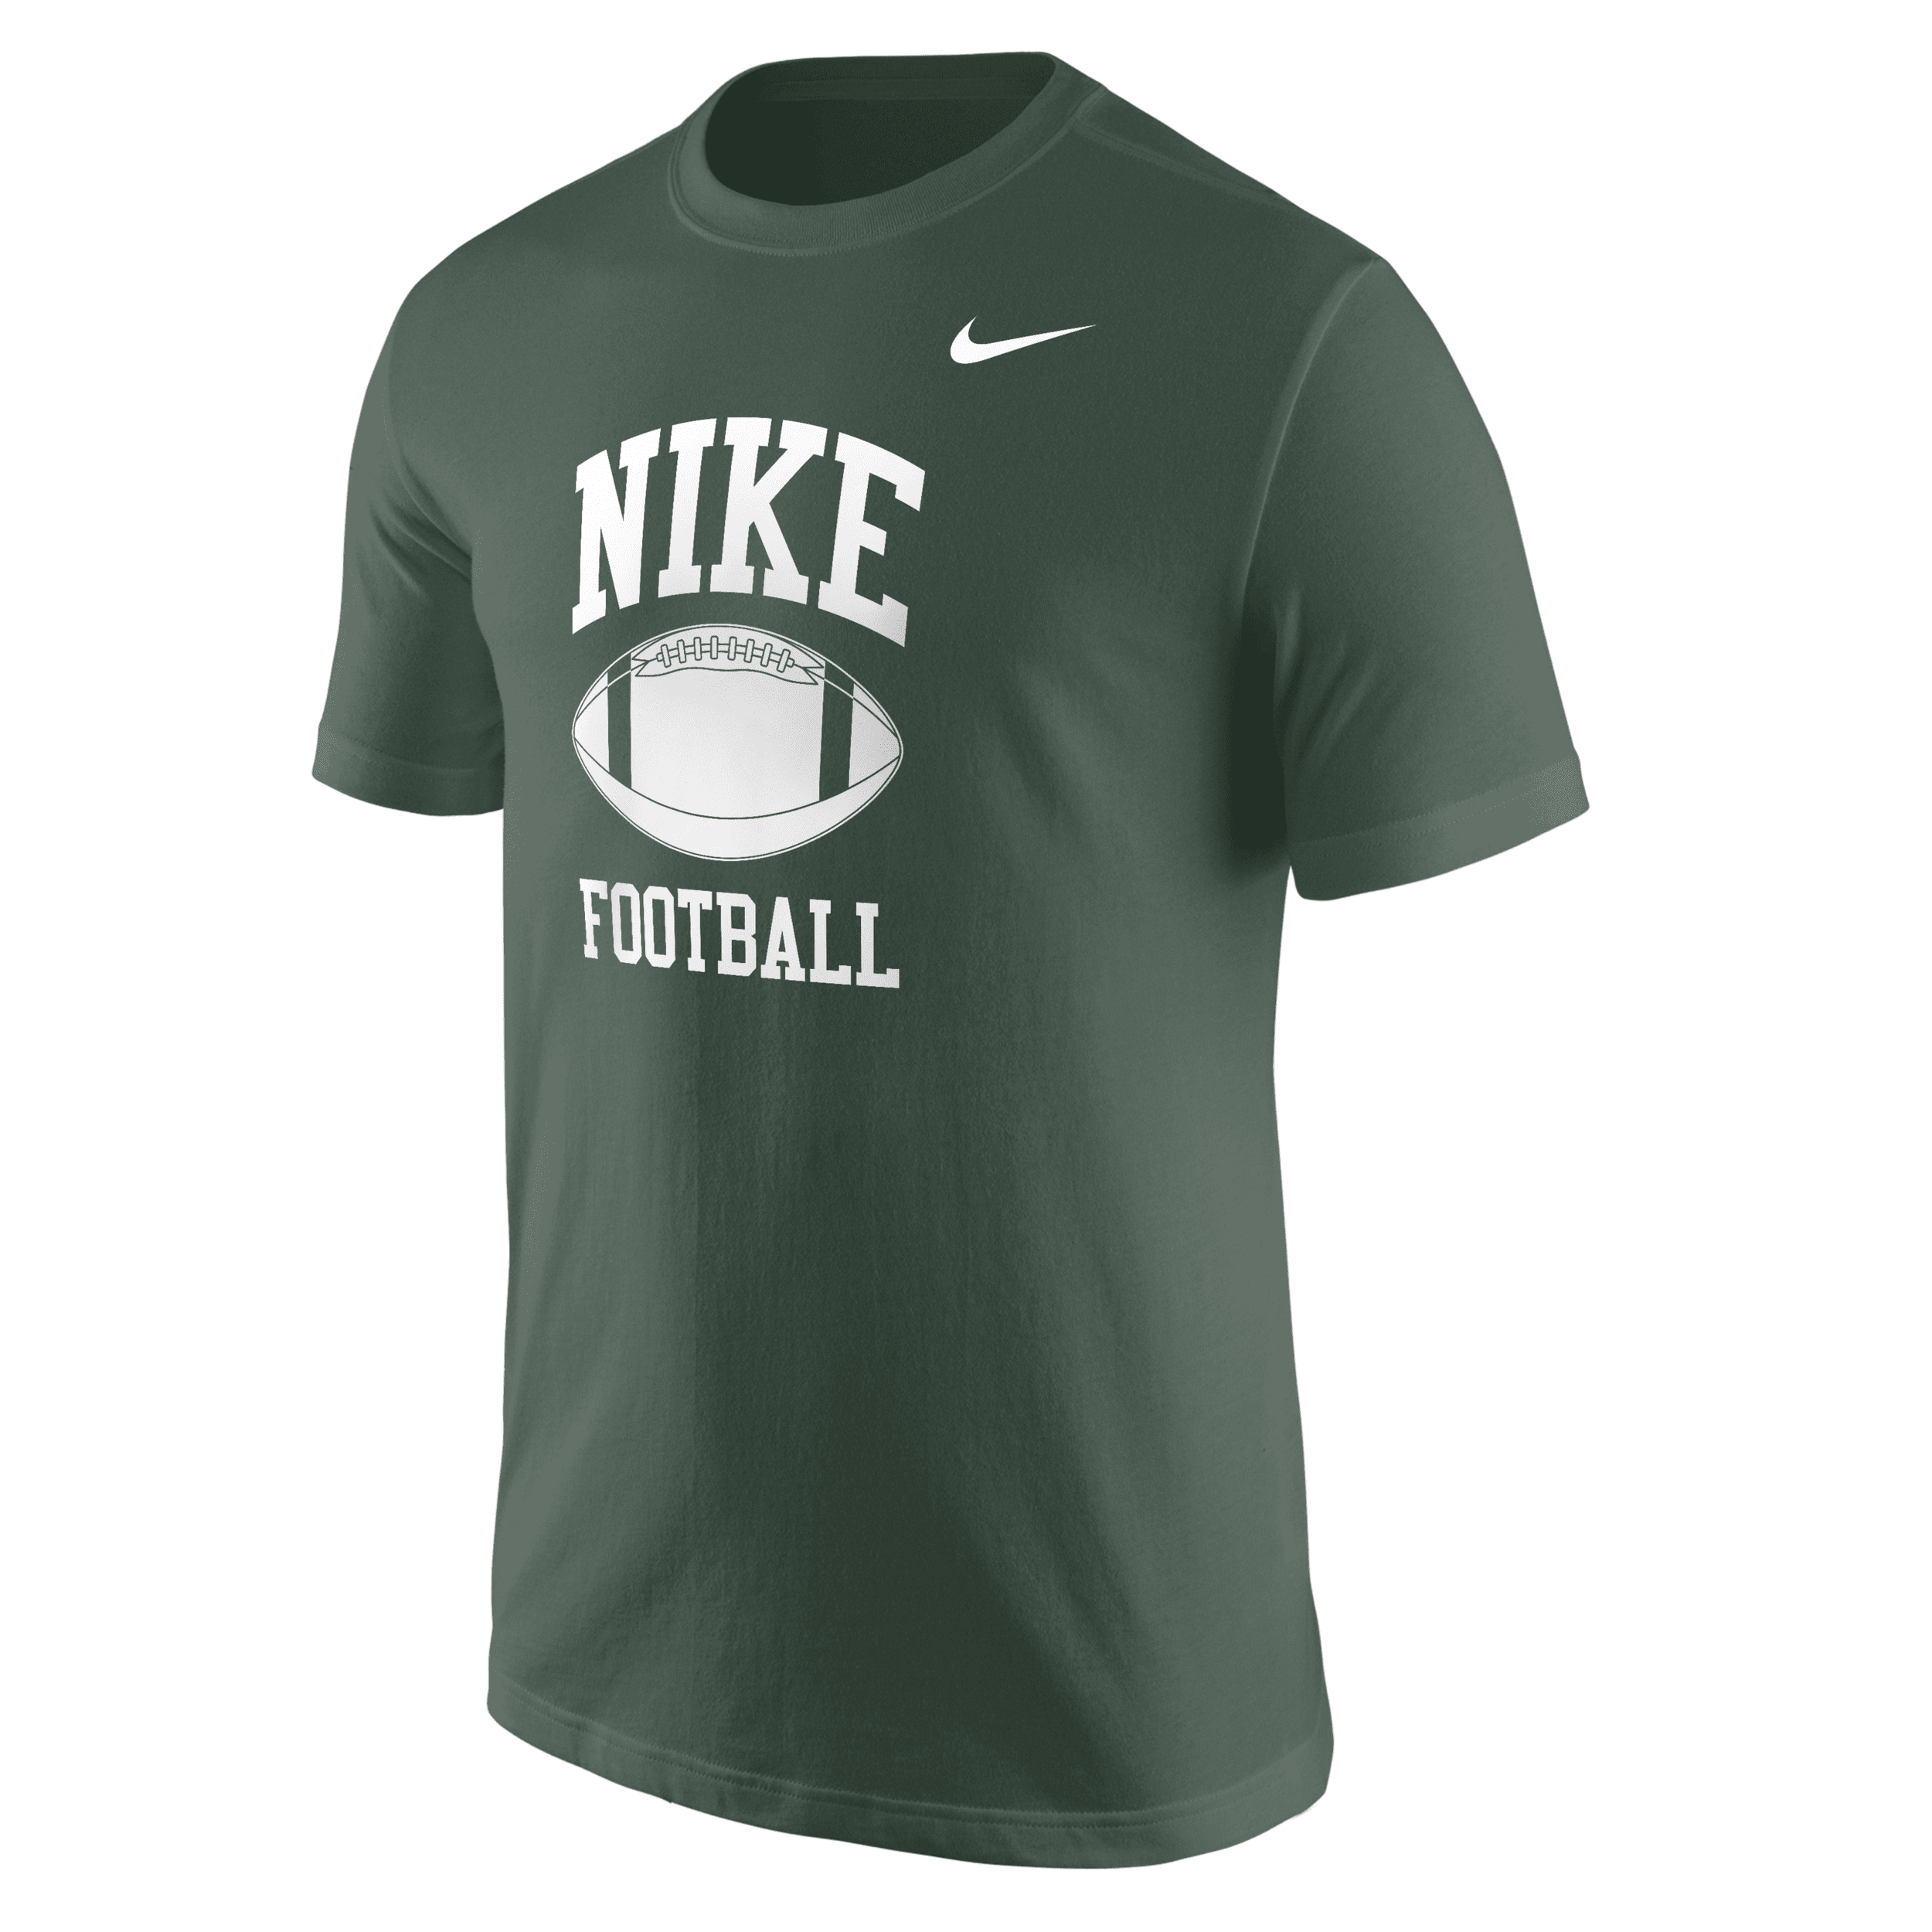 Nike Men's Football T-shirt In Green